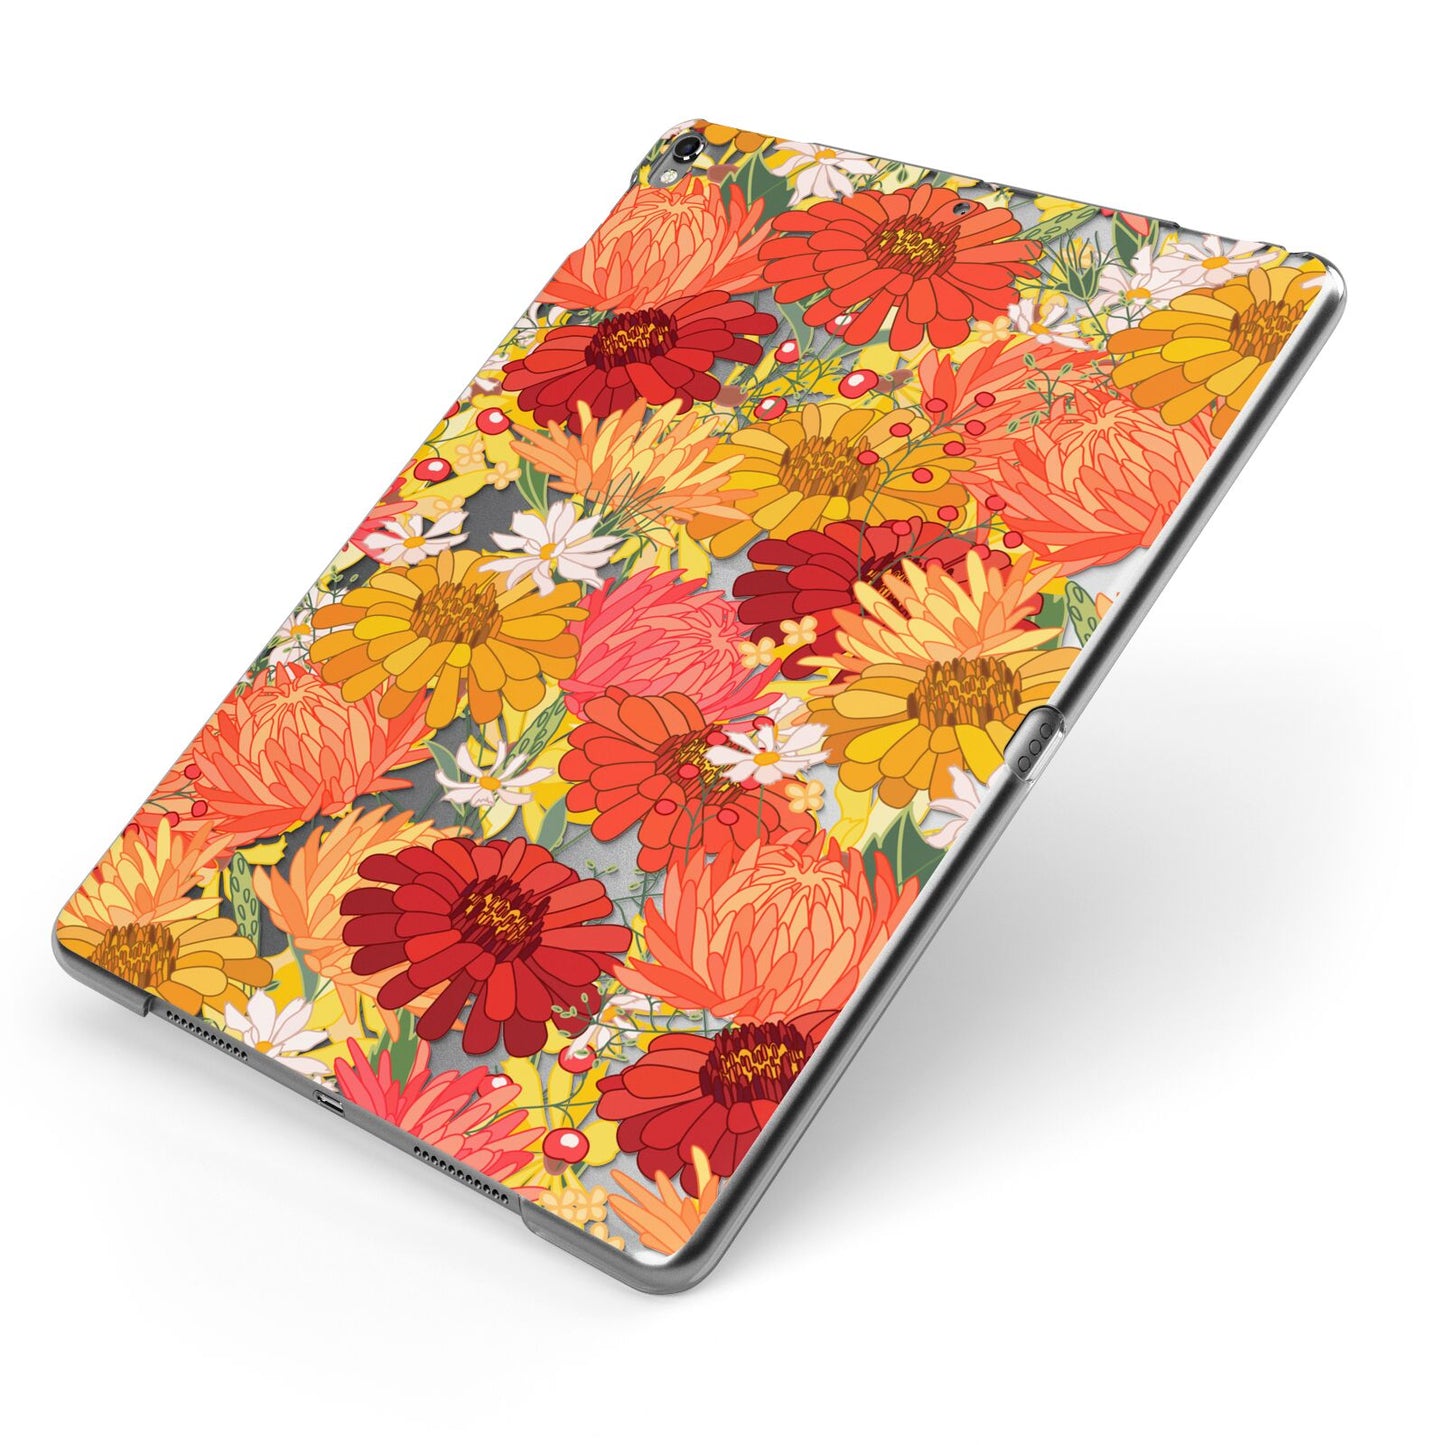 Floral Gerbera Apple iPad Case on Grey iPad Side View